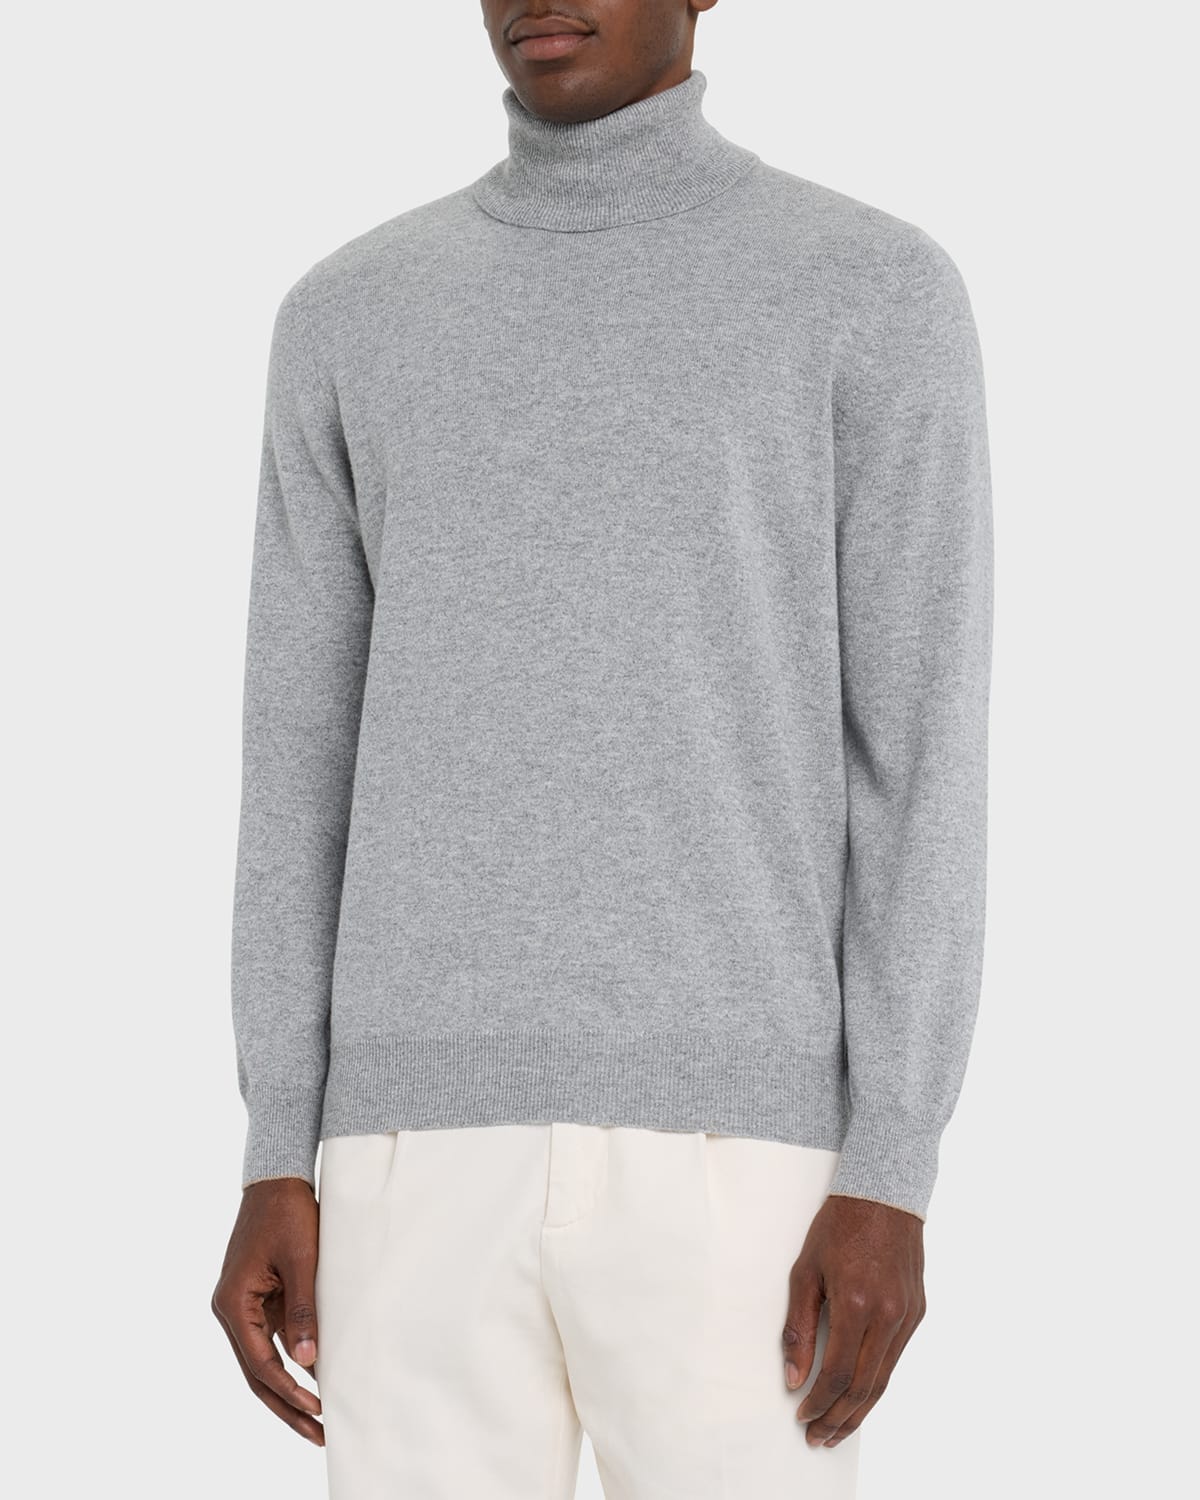 Men's Cashmere Turtleneck Sweater